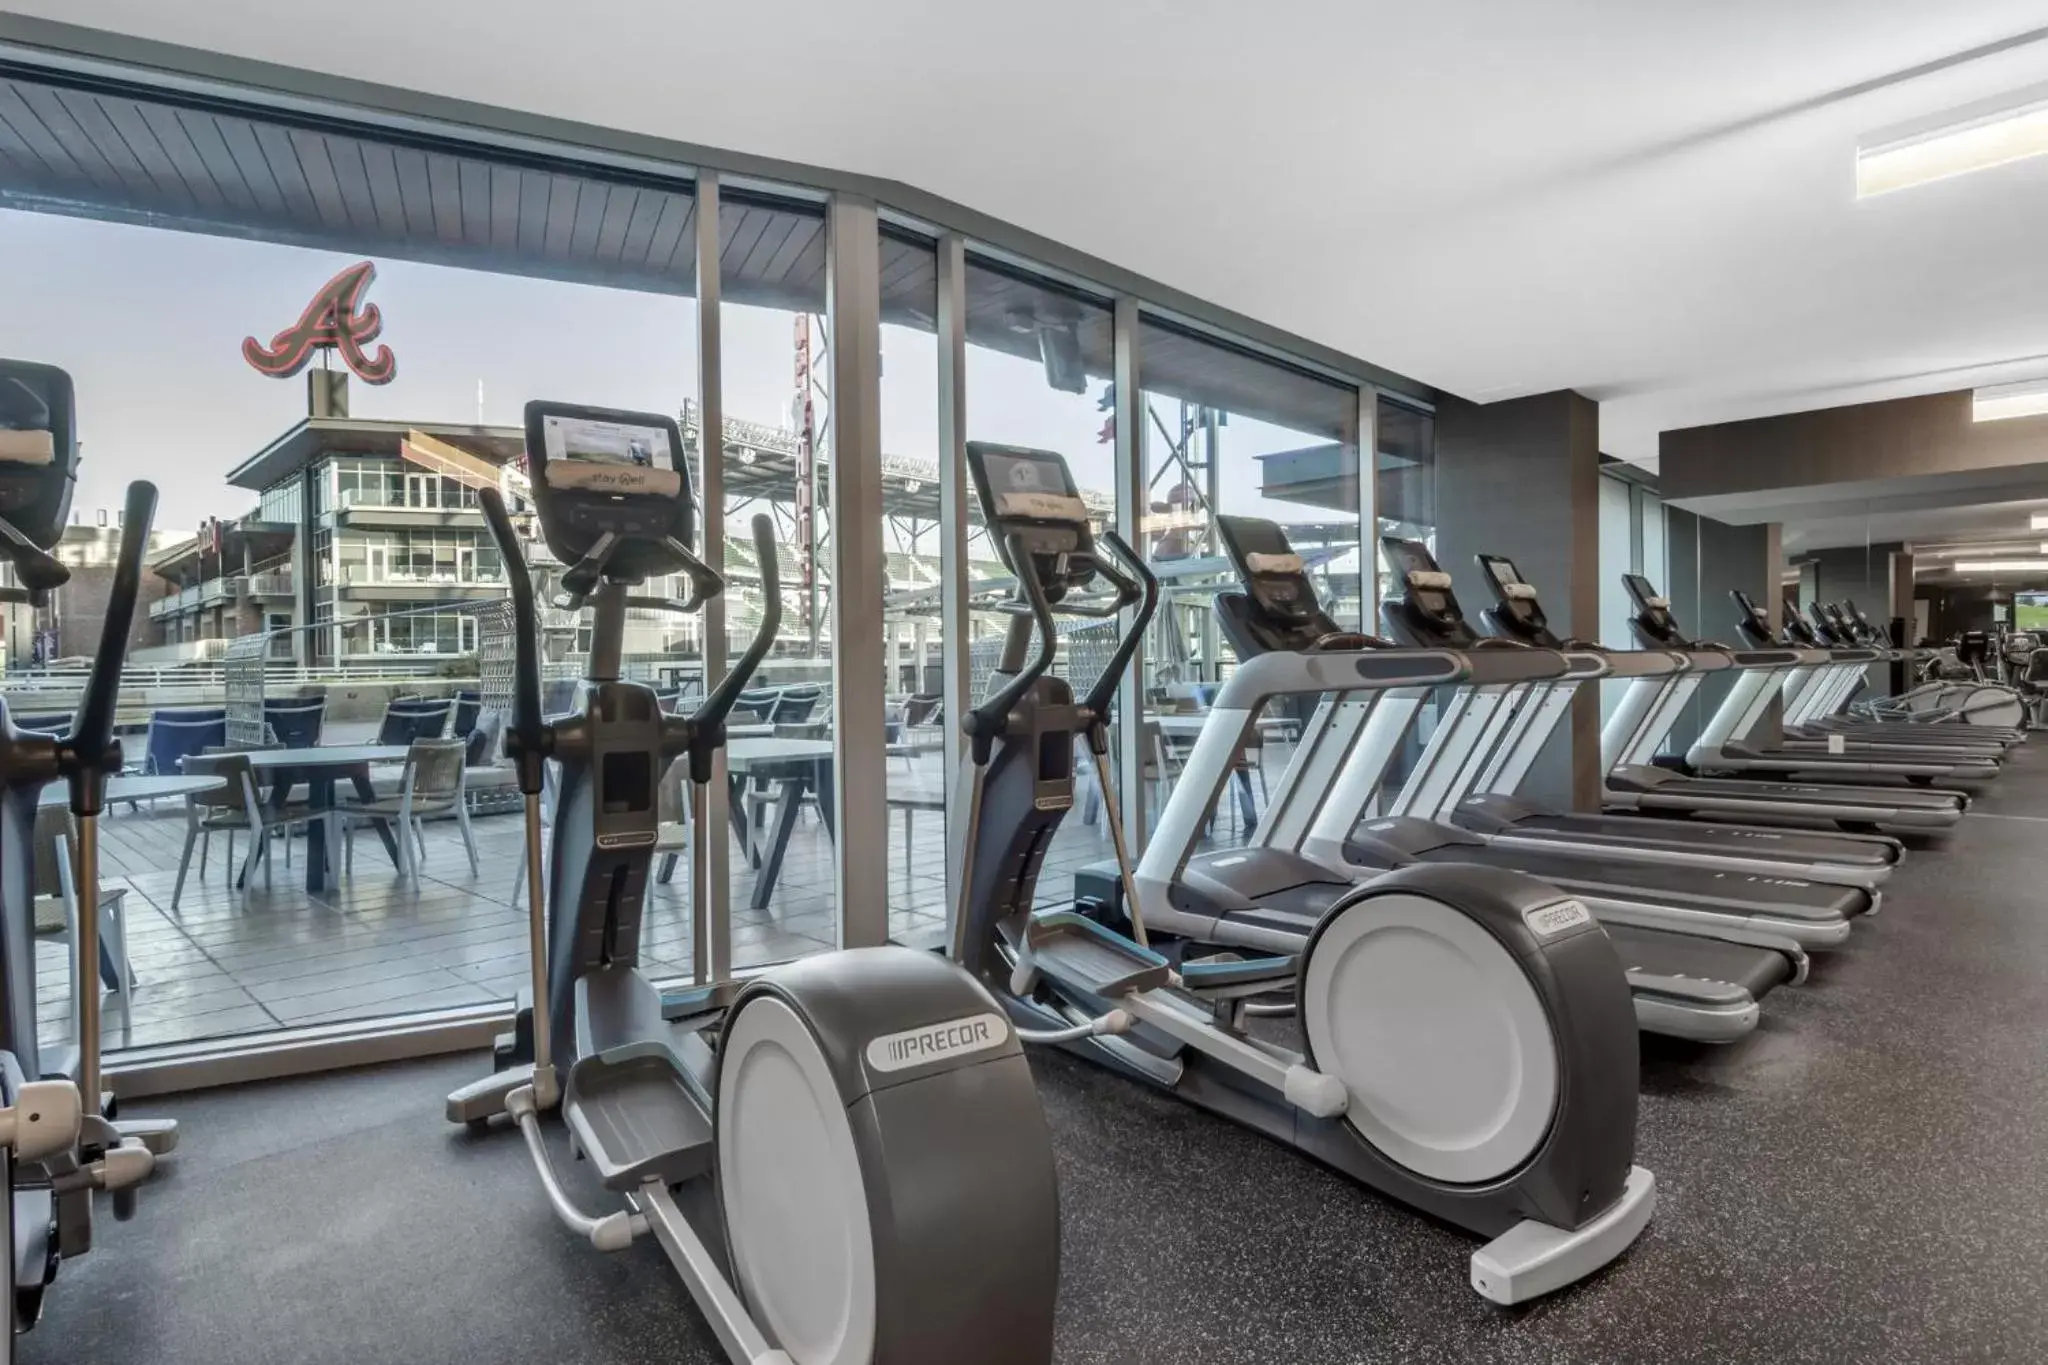 Fitness centre/facilities, Fitness Center/Facilities in Omni Hotel at the Battery Atlanta